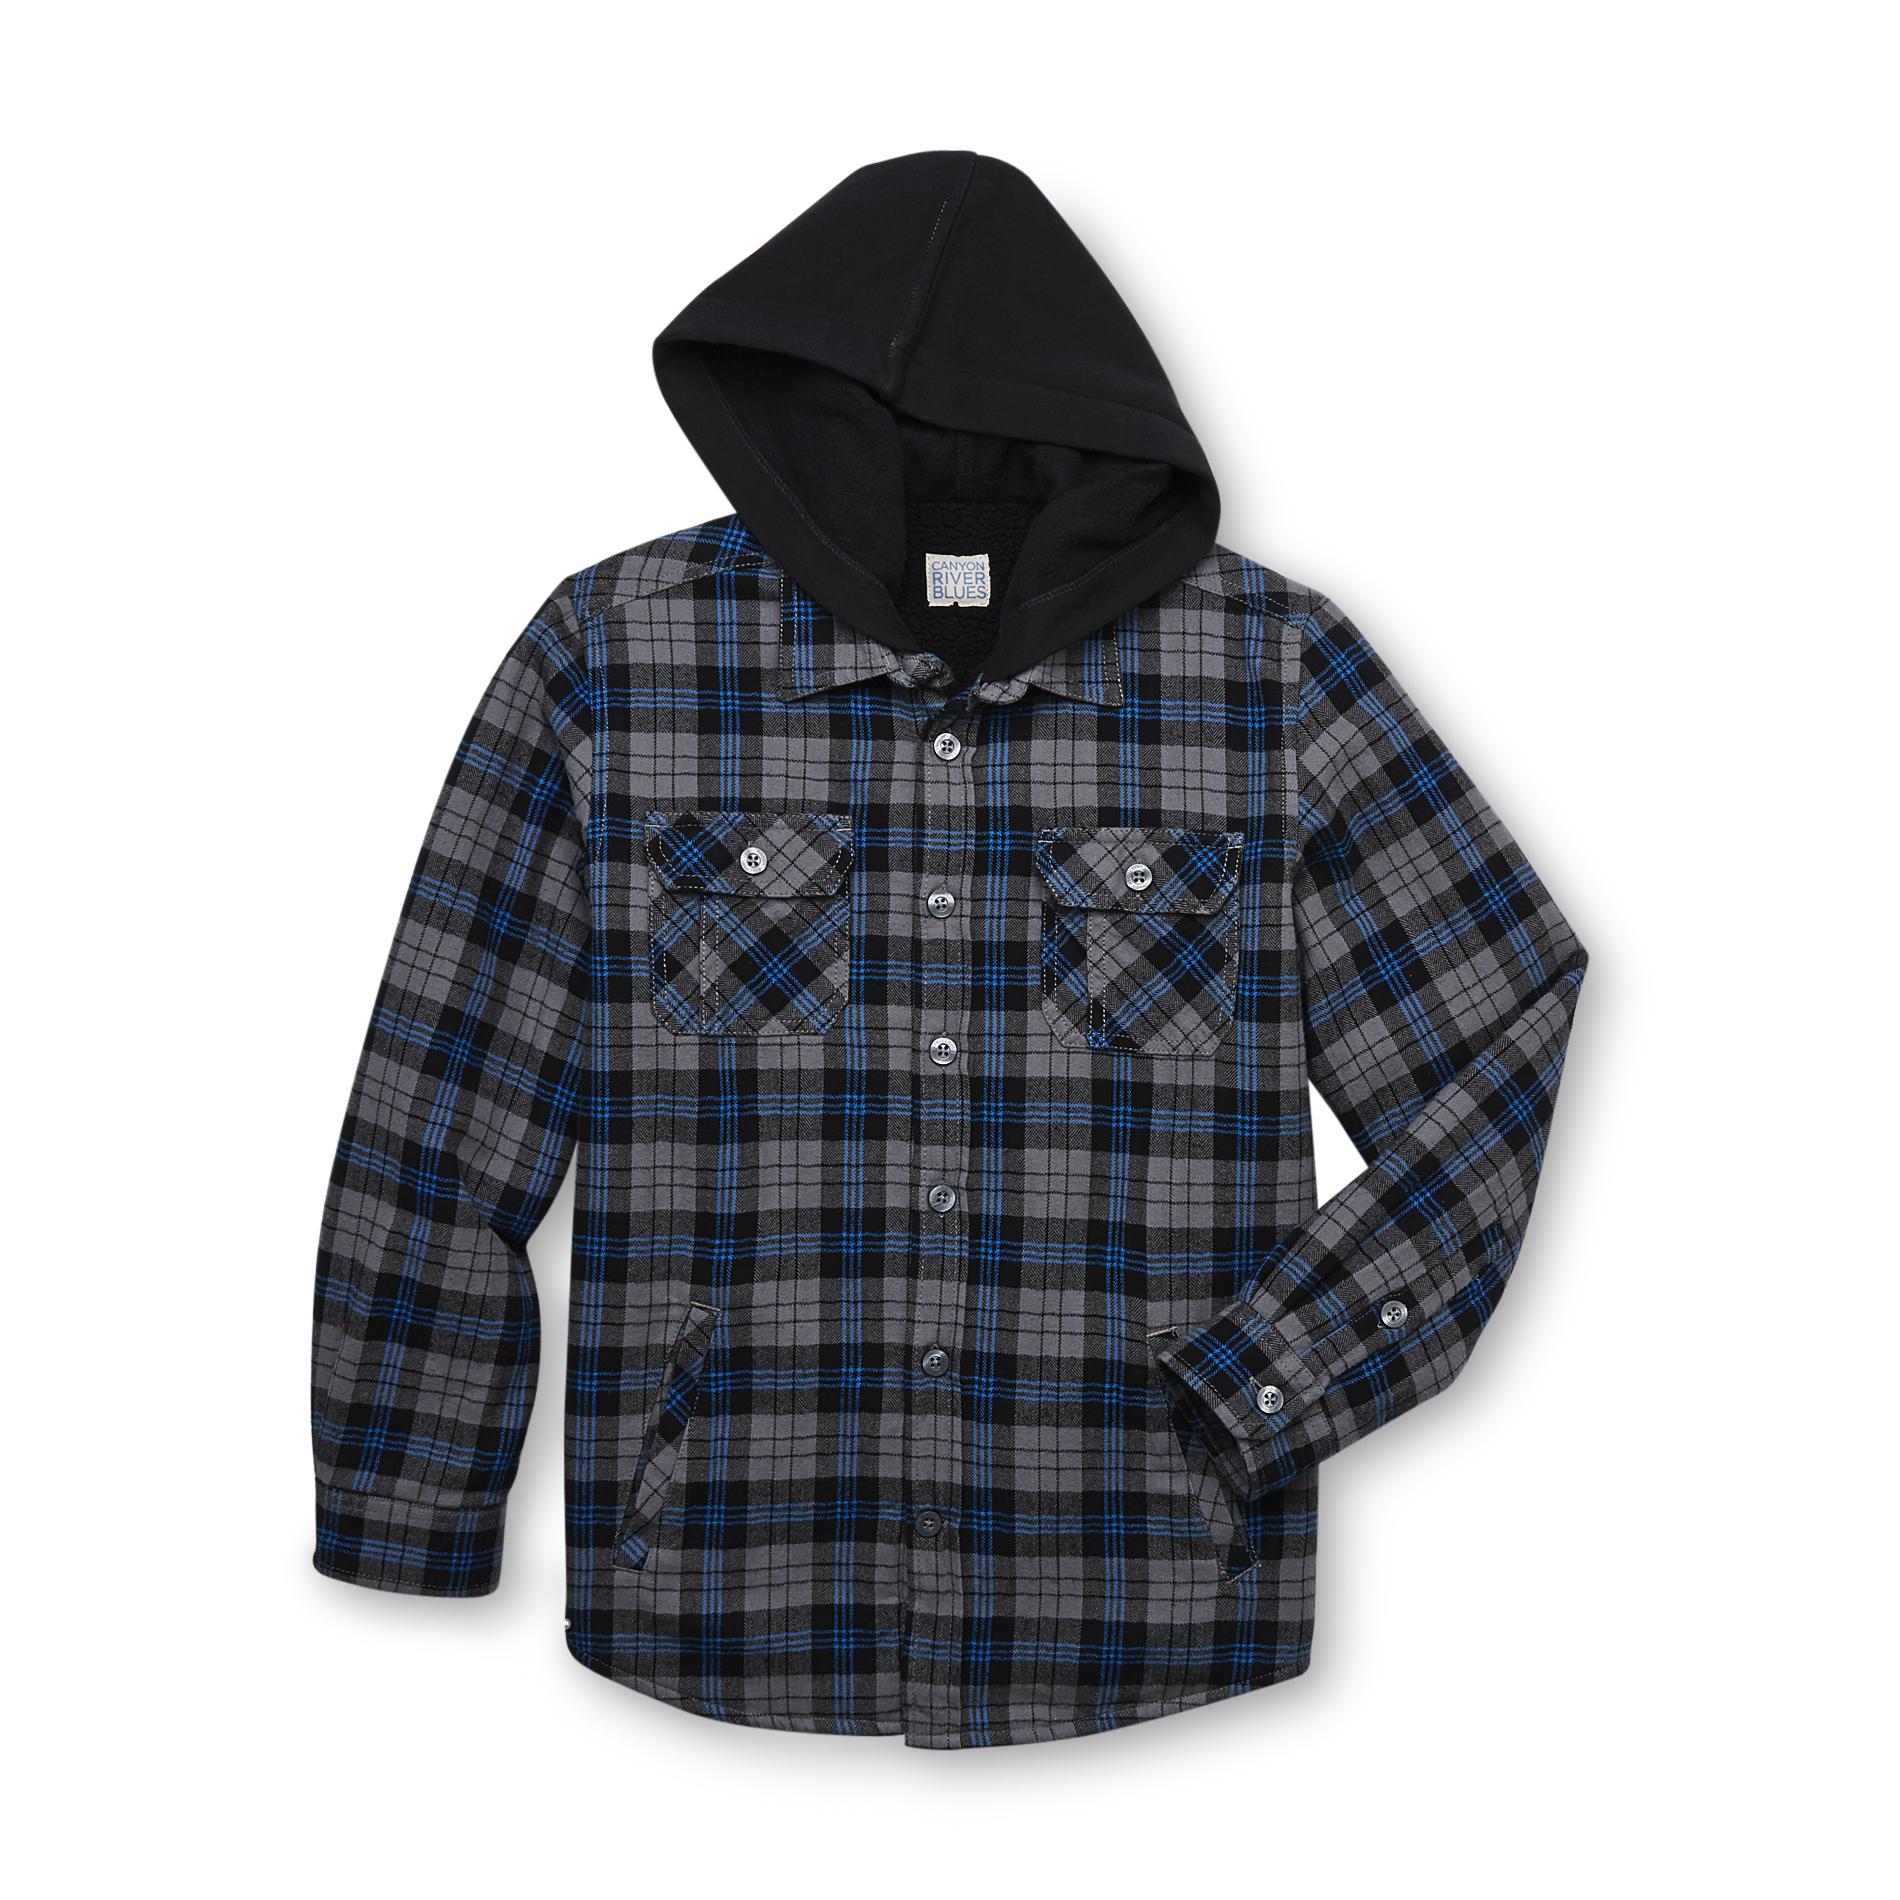 Canyon River Blues Boy's Hooded Shirt Jacket - Plaid